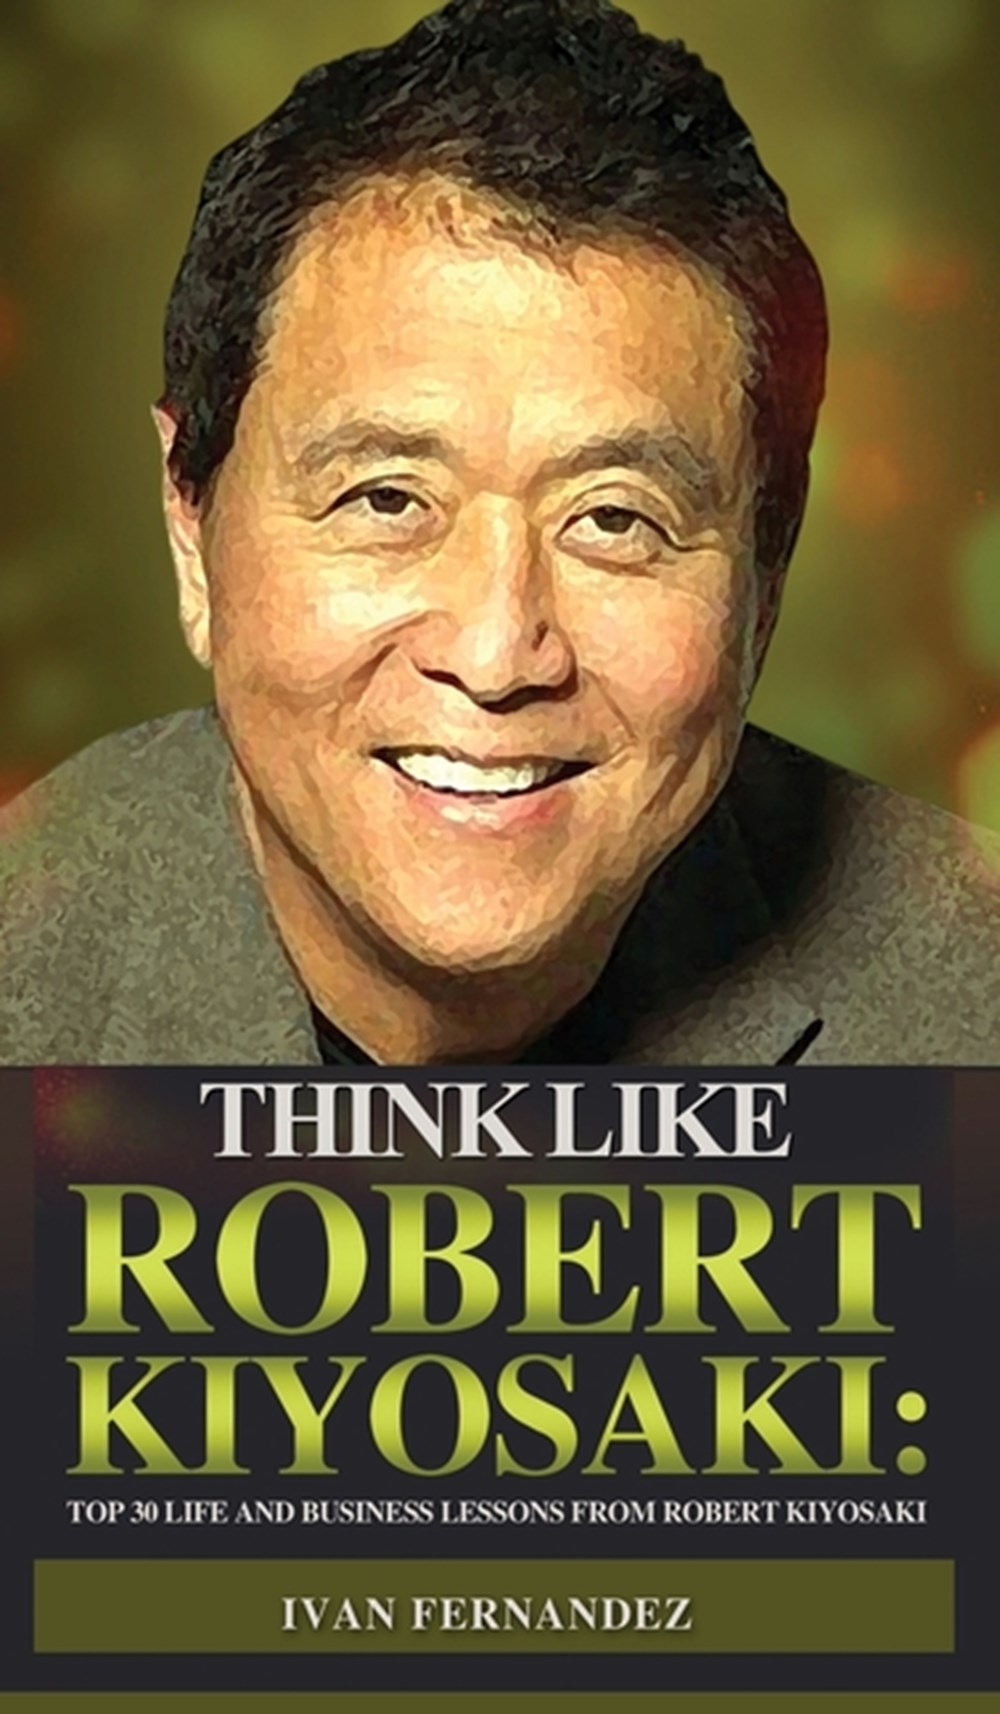 Think Like Robert Kiyosaki Top 30 Life and Business Lessons from Robert Kiyosaki